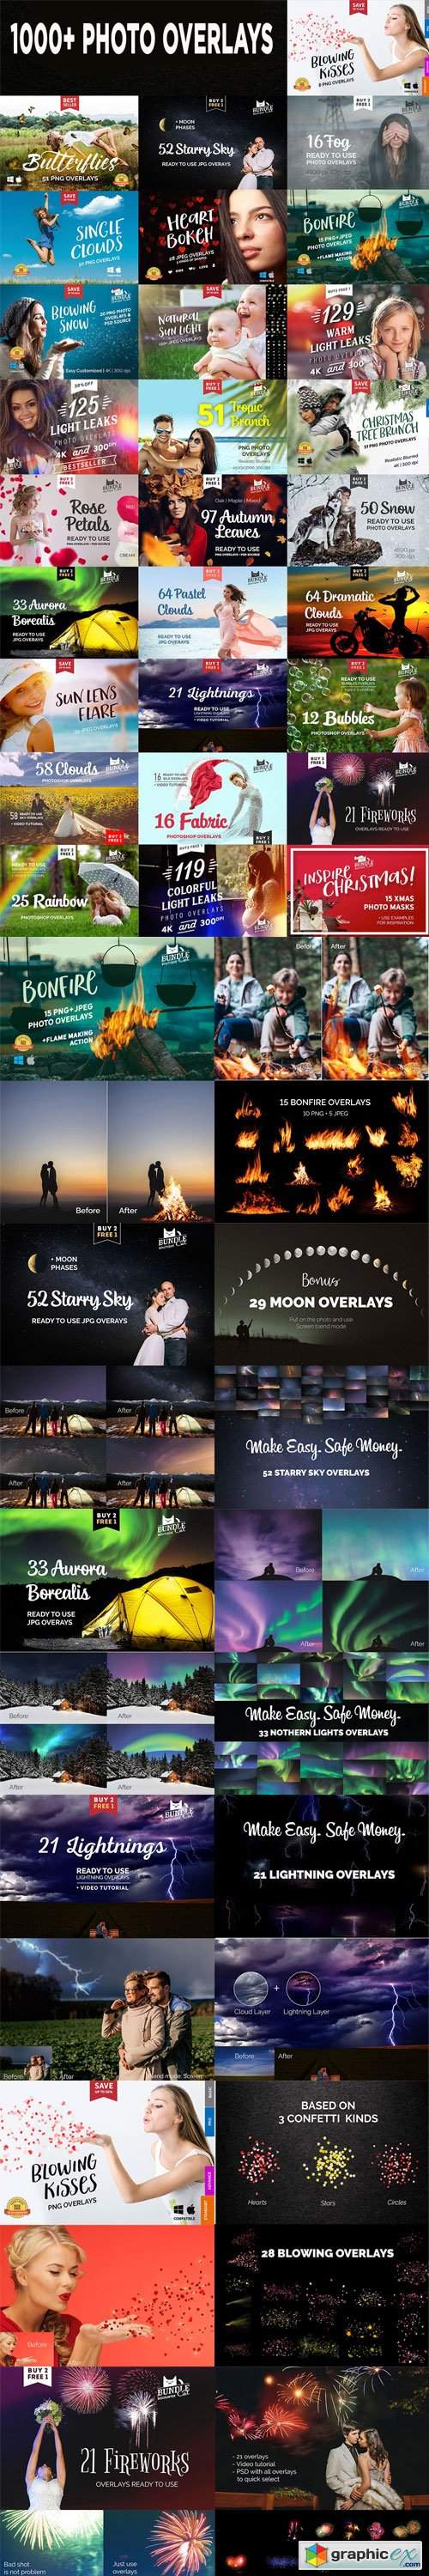 1000+ Photo Overlays, Bonfire Overlays, Starry Sky, Аurora Borealis Overlays, Butterfly, Fabric Overlays + More